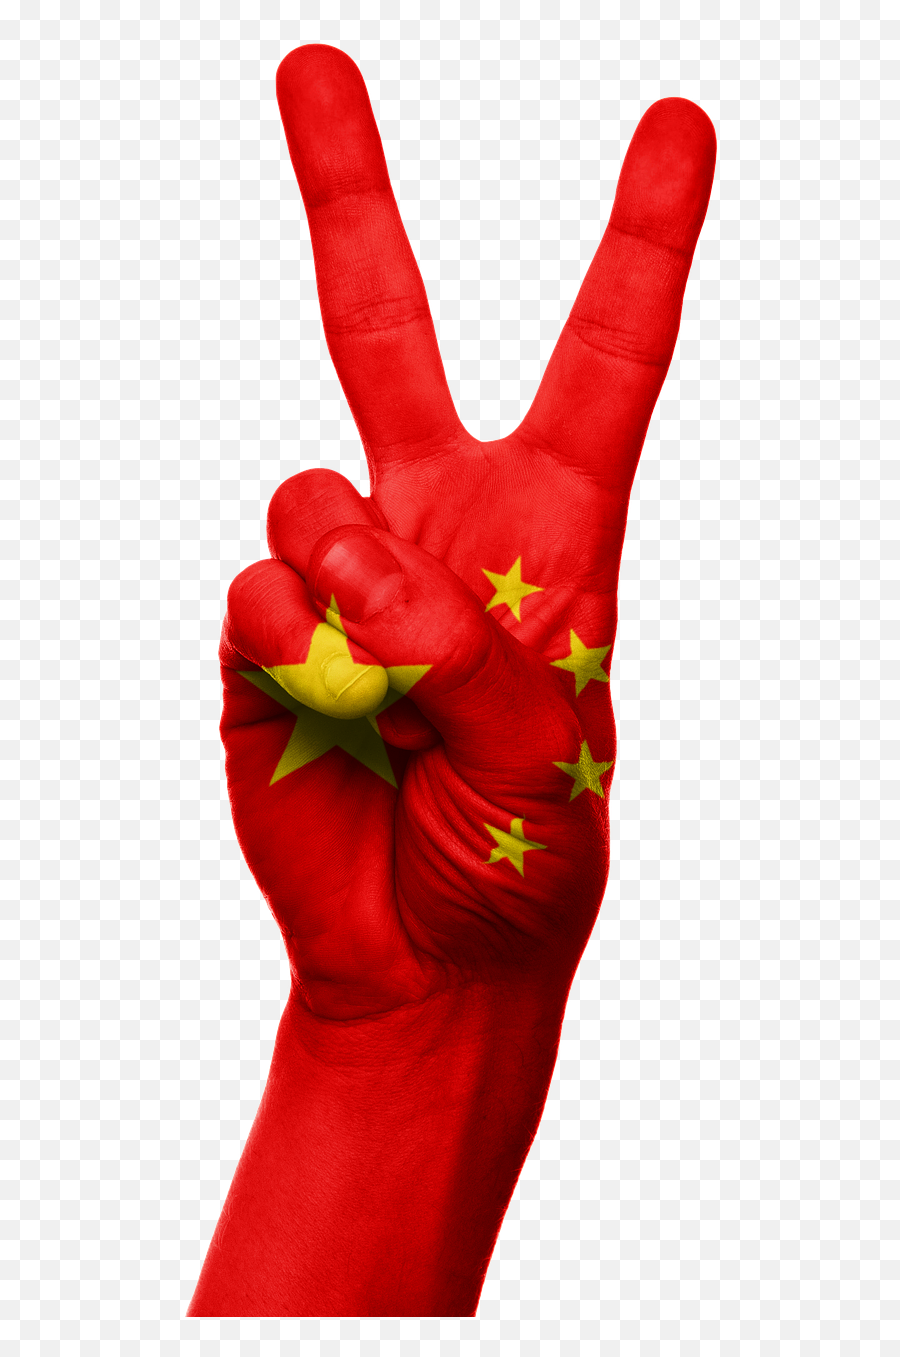 China Flag Hand - Free Image On Pixabay Emoji,China Flag Png